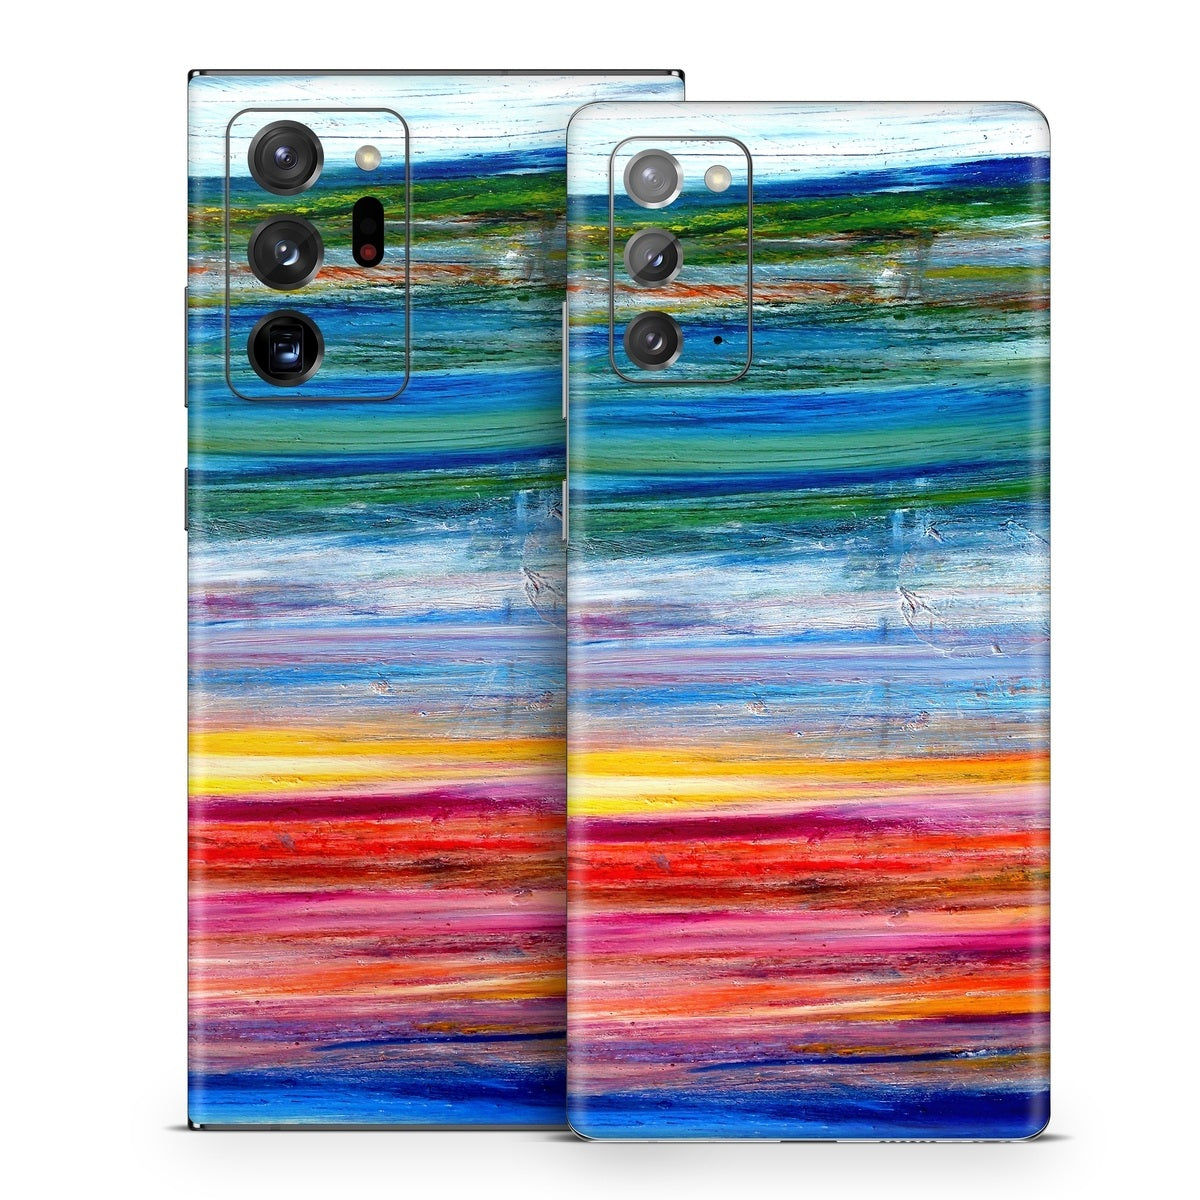 Waterfall - Samsung Galaxy Note 20 Skin